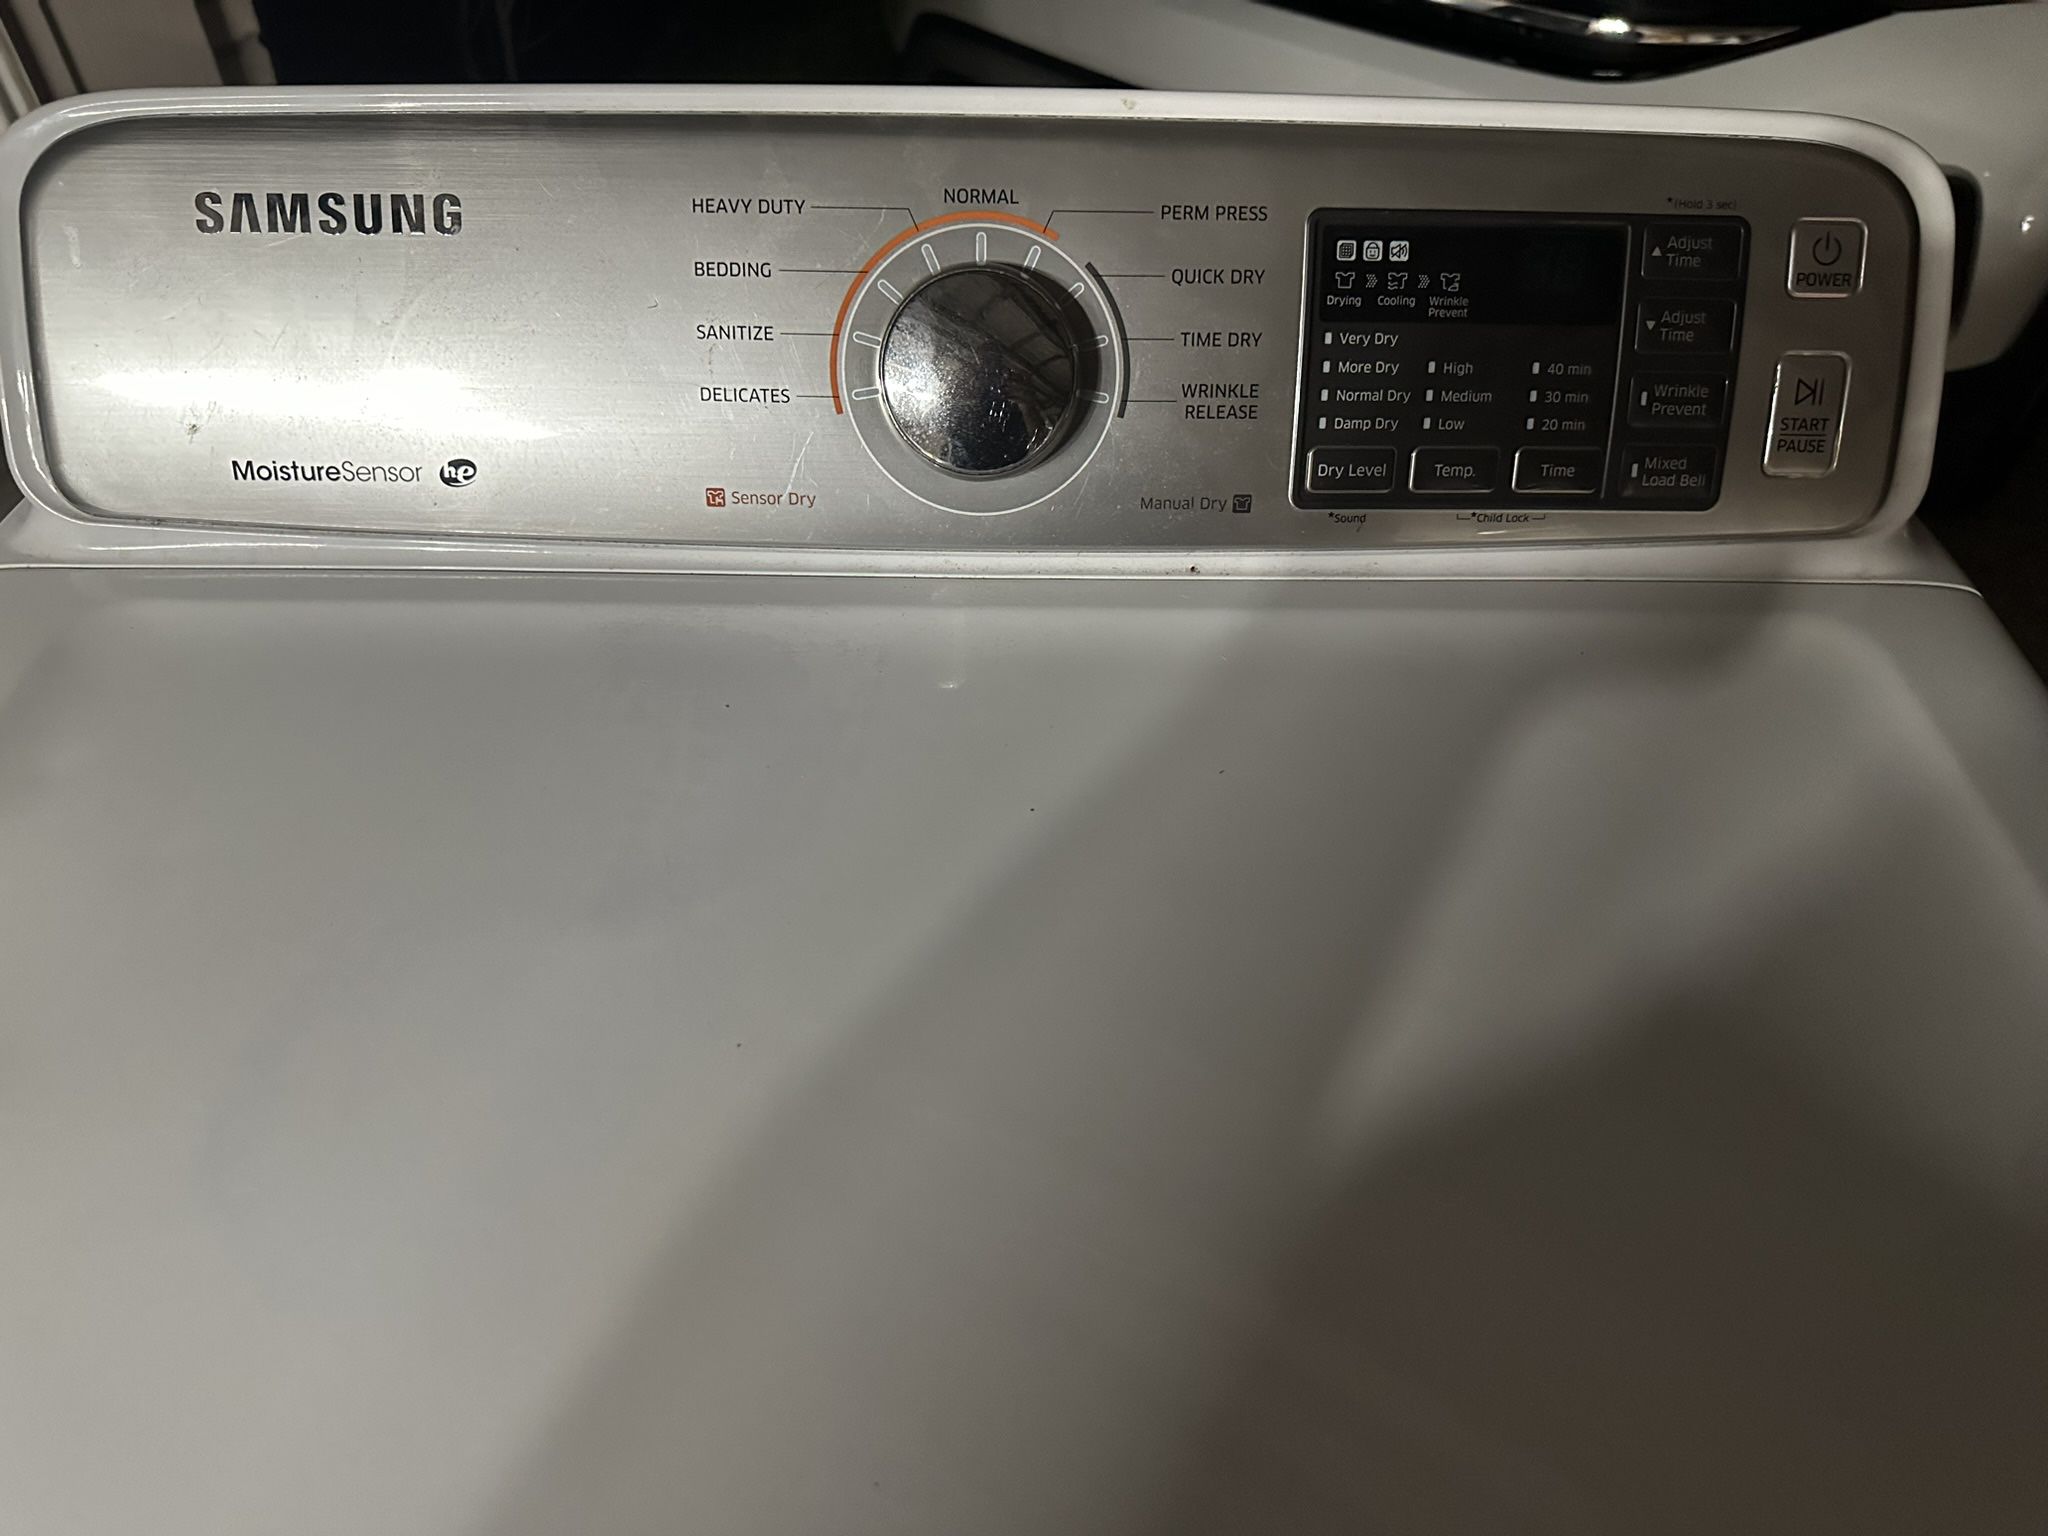 Samsung Washer And Dryer Set 